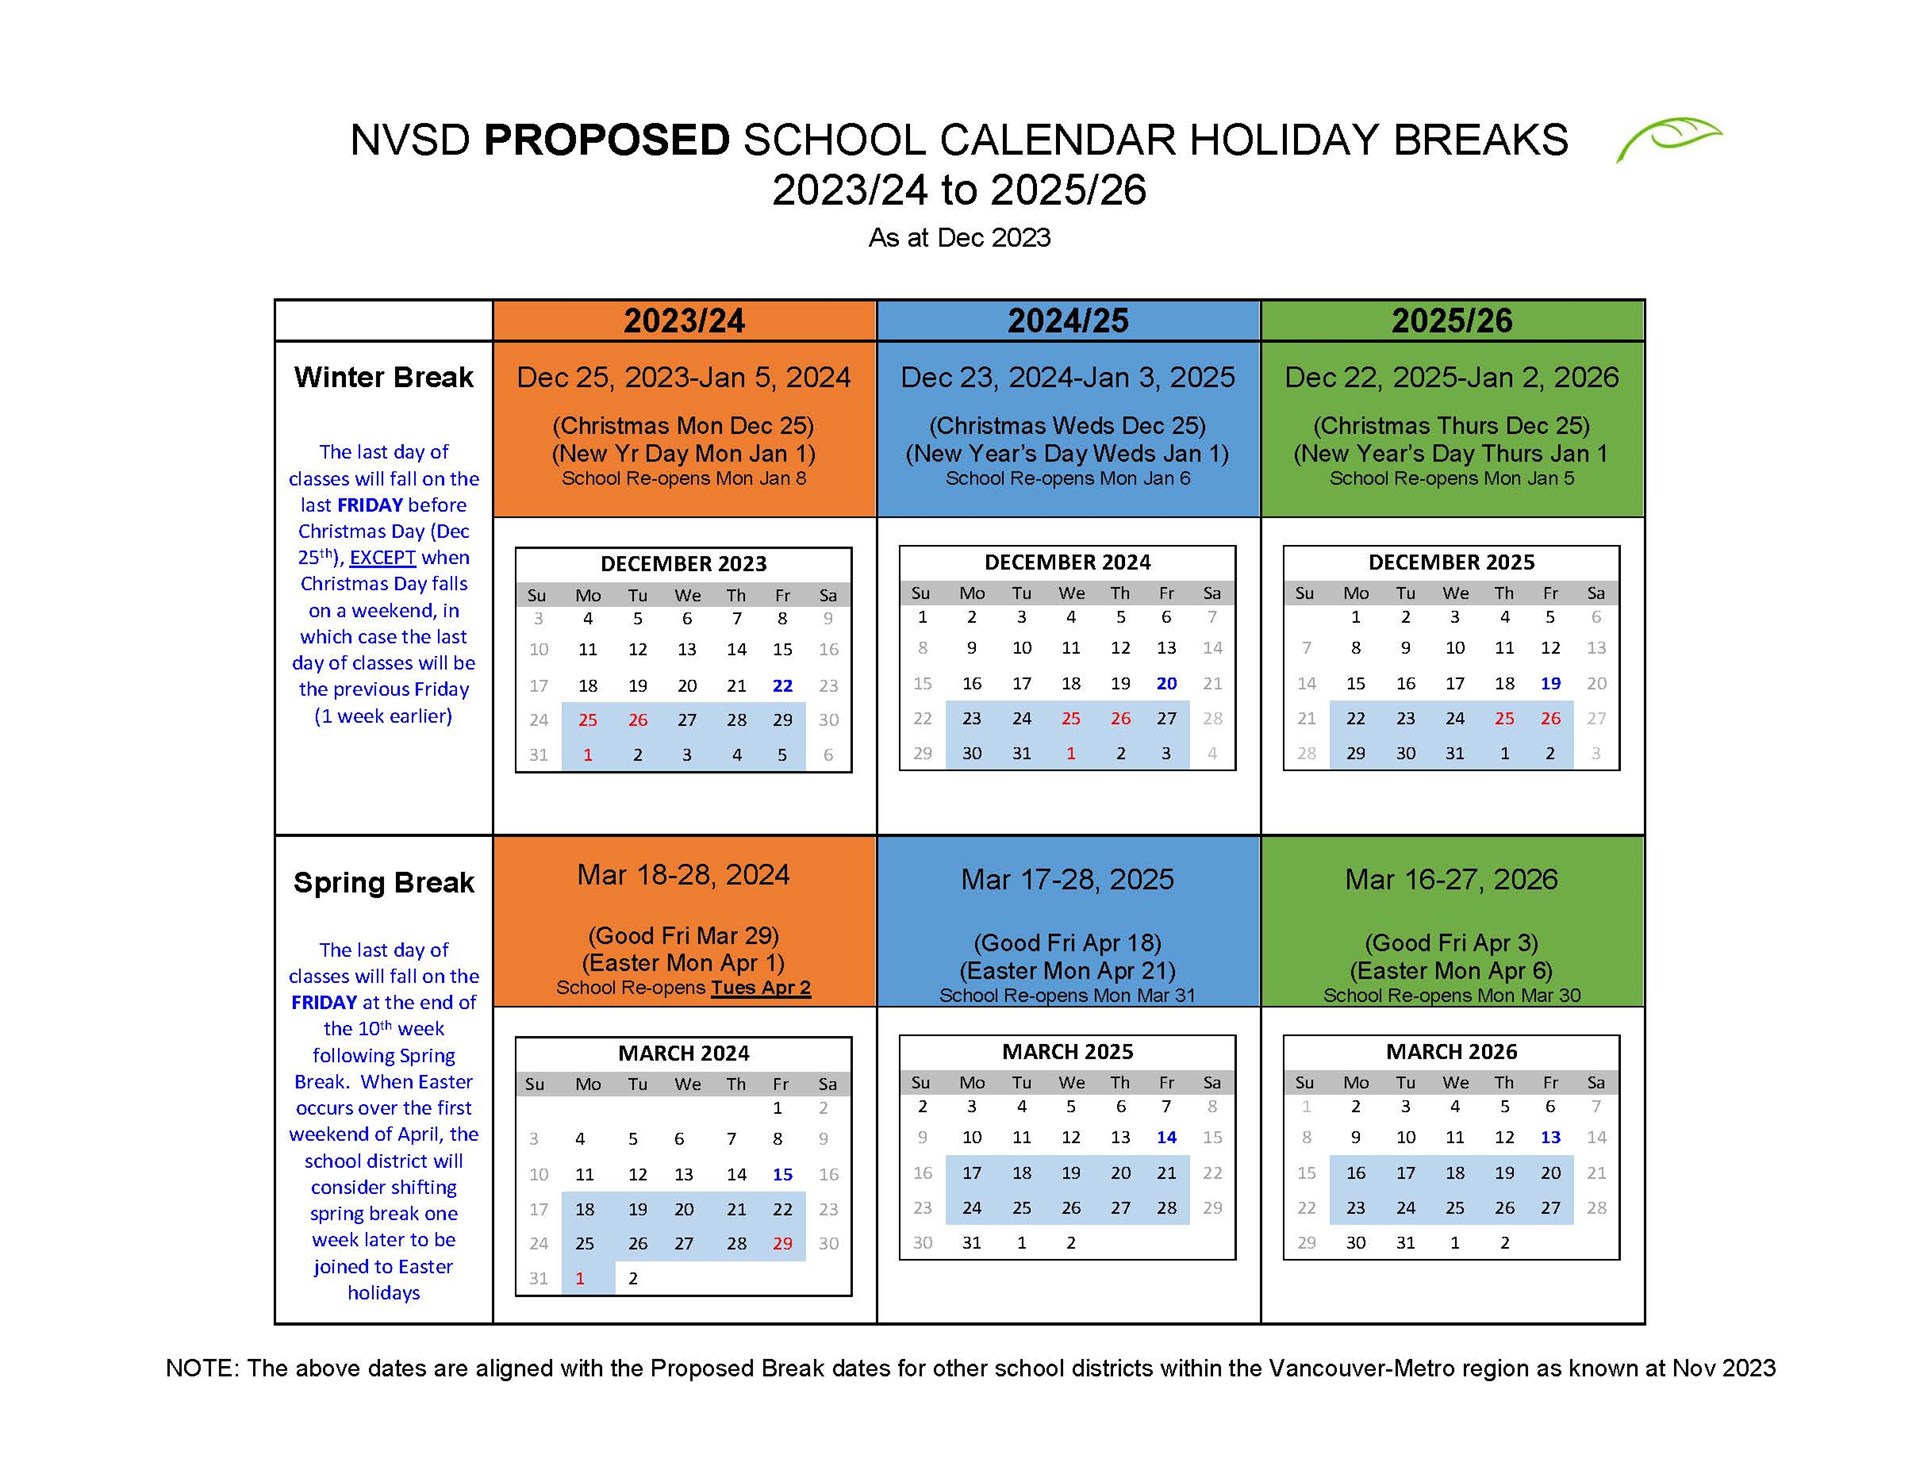 NVSD Break Schedule 2023-2026 201223.jpg